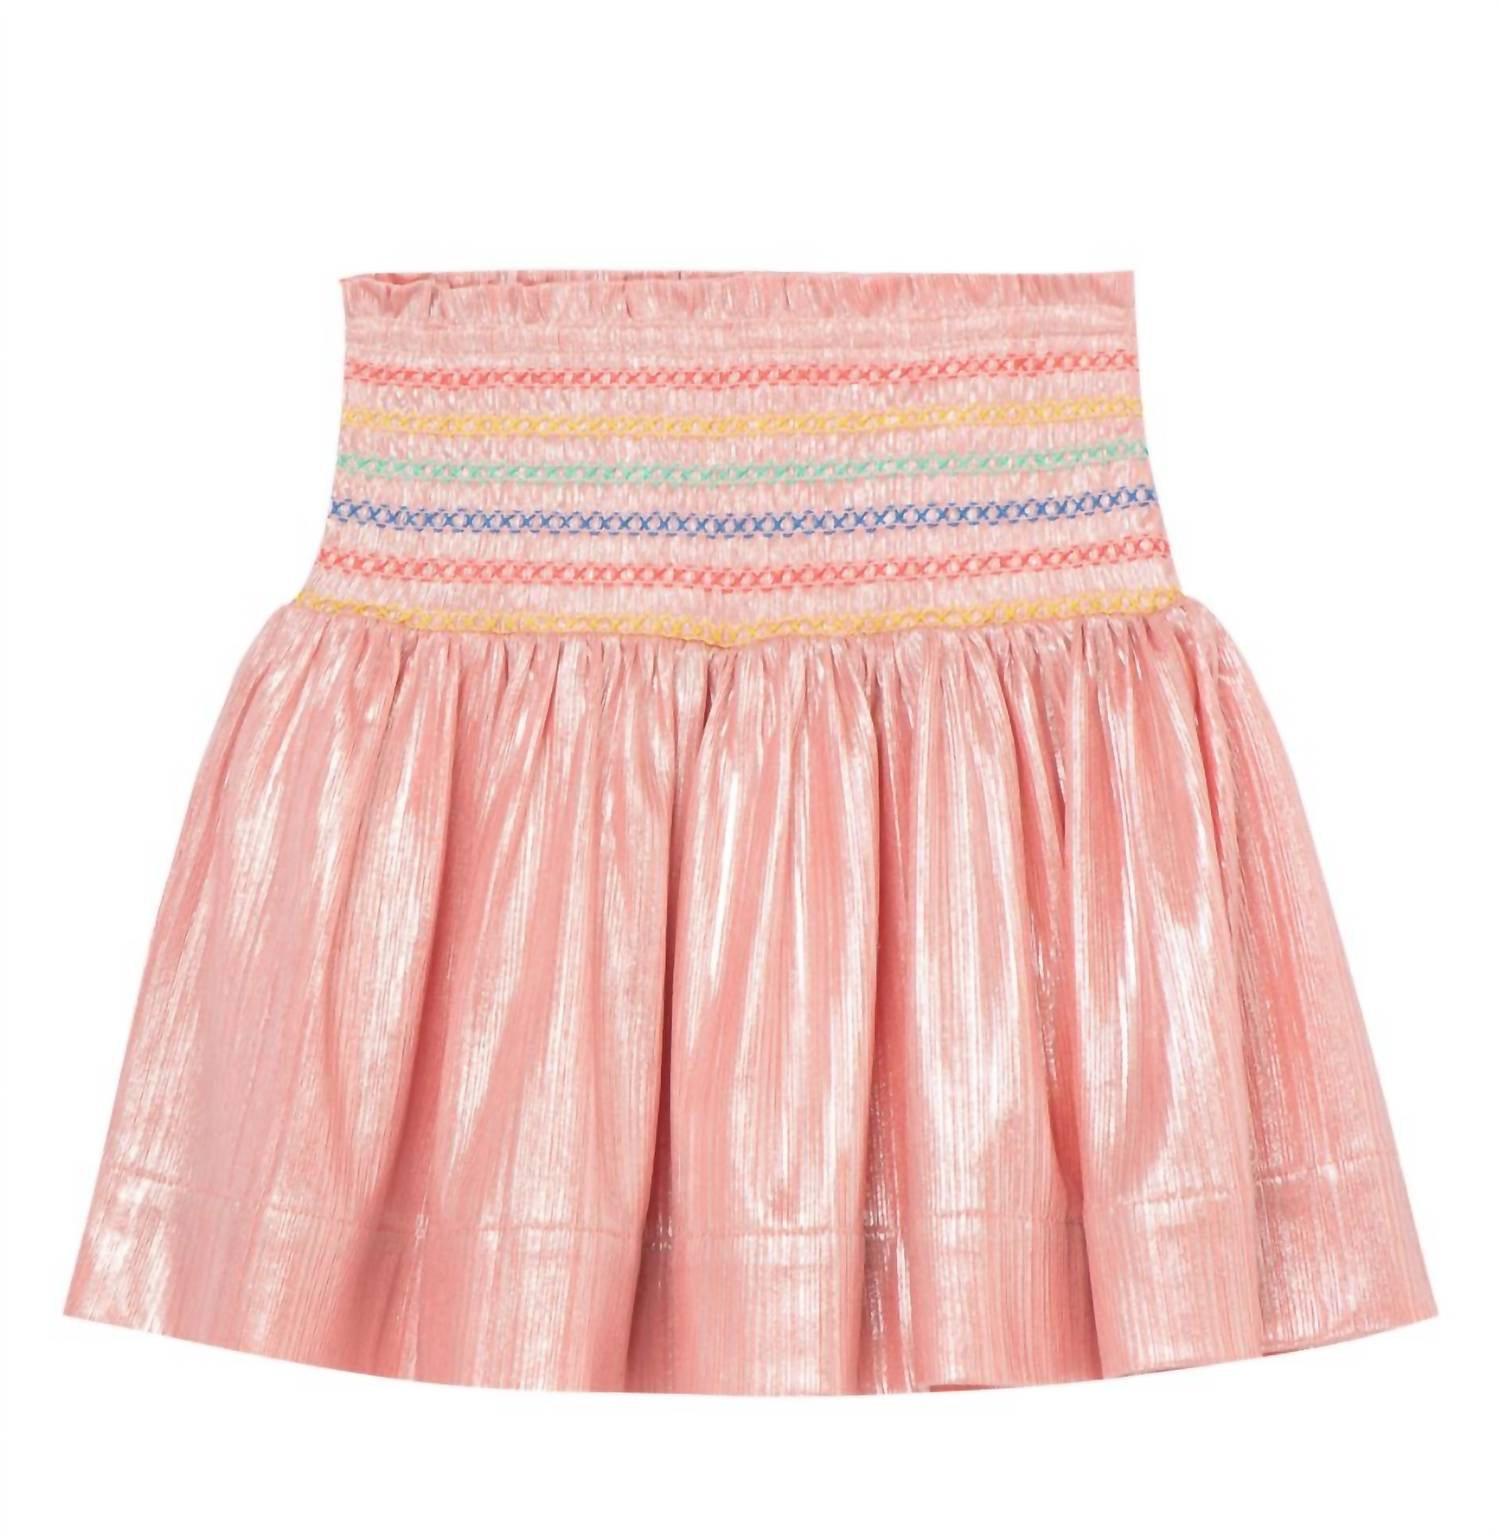 PEEK Kids Shiny Faille Smocked Skirt in Pink